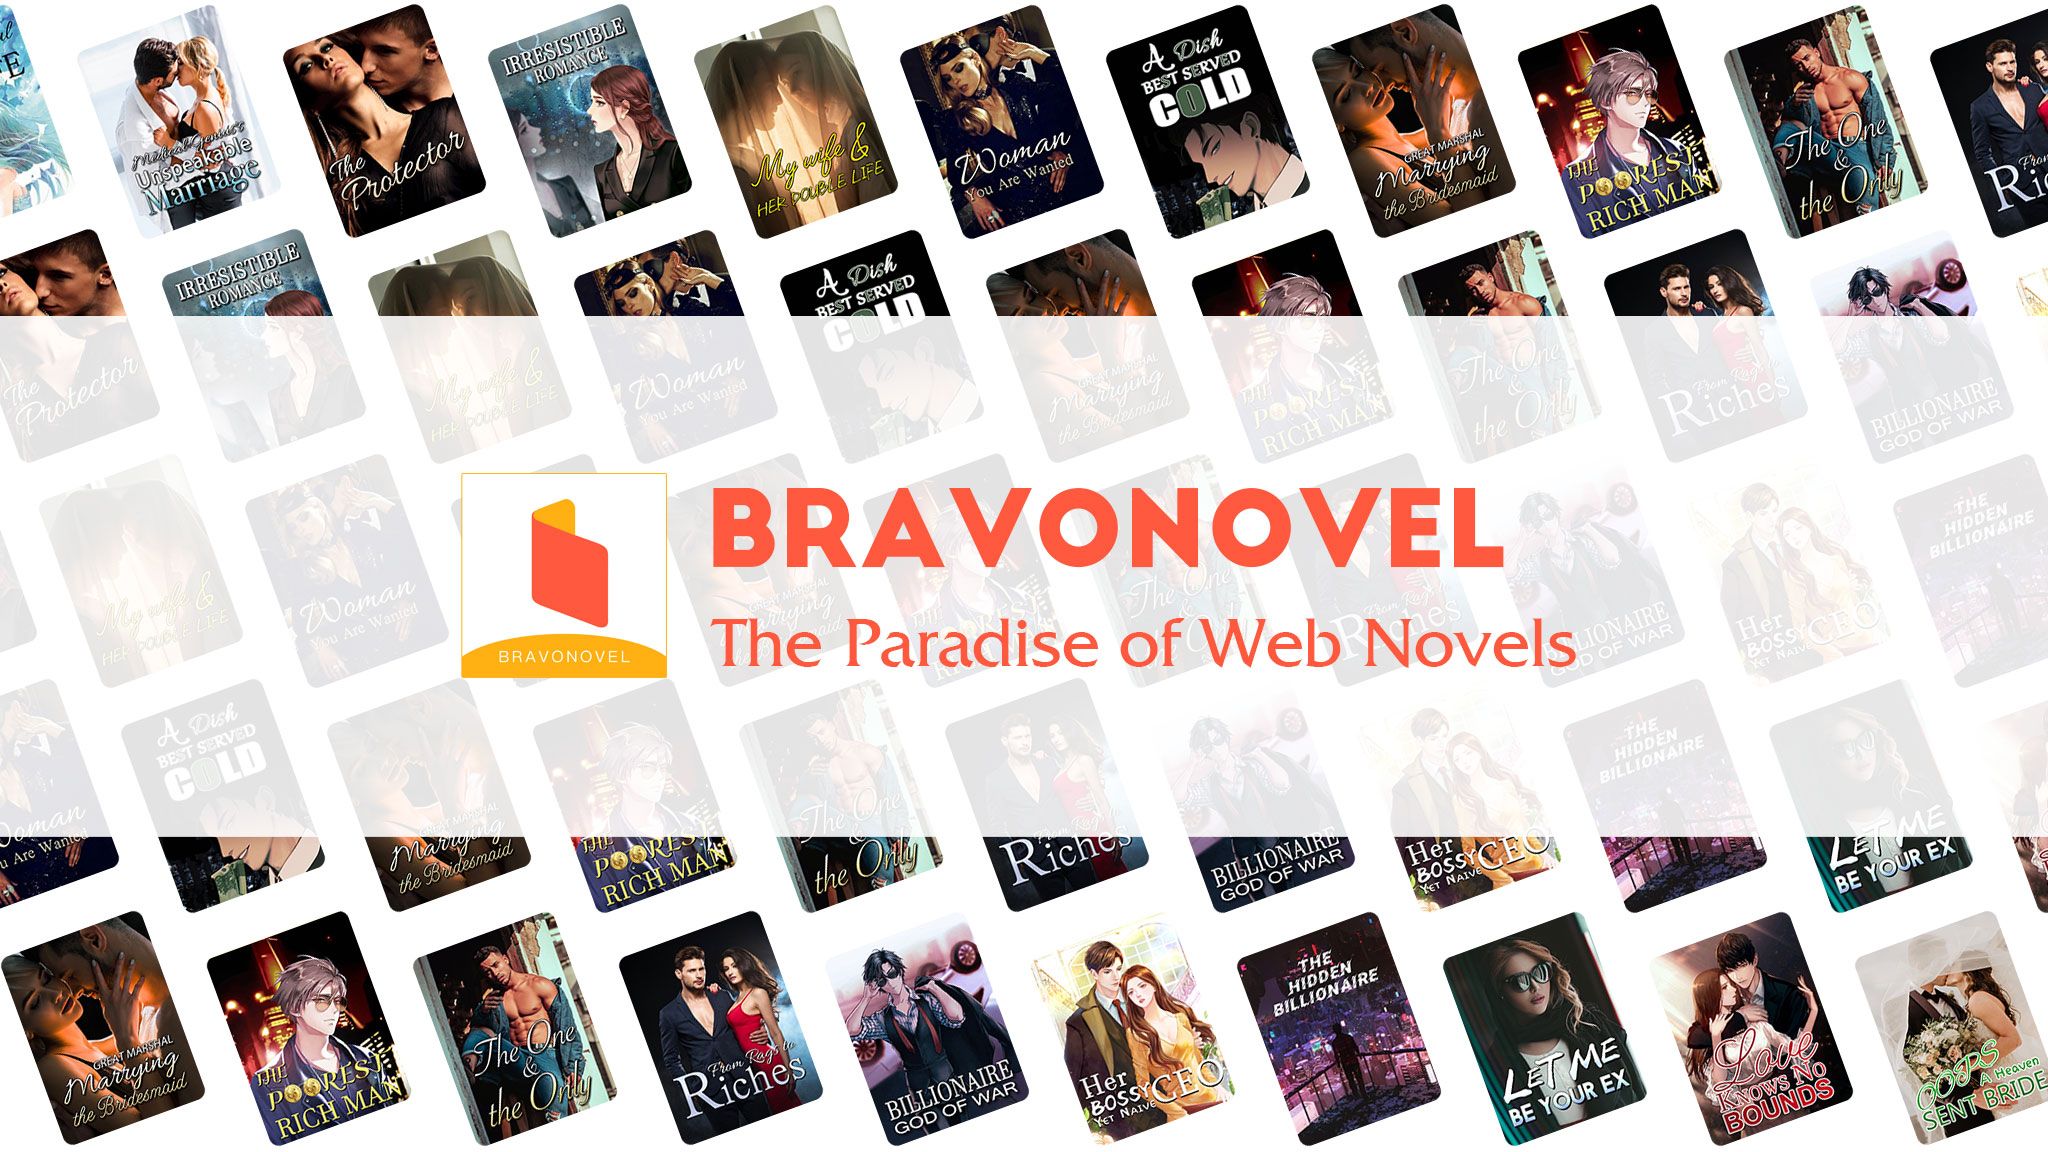 Bravo novel's Cover Image